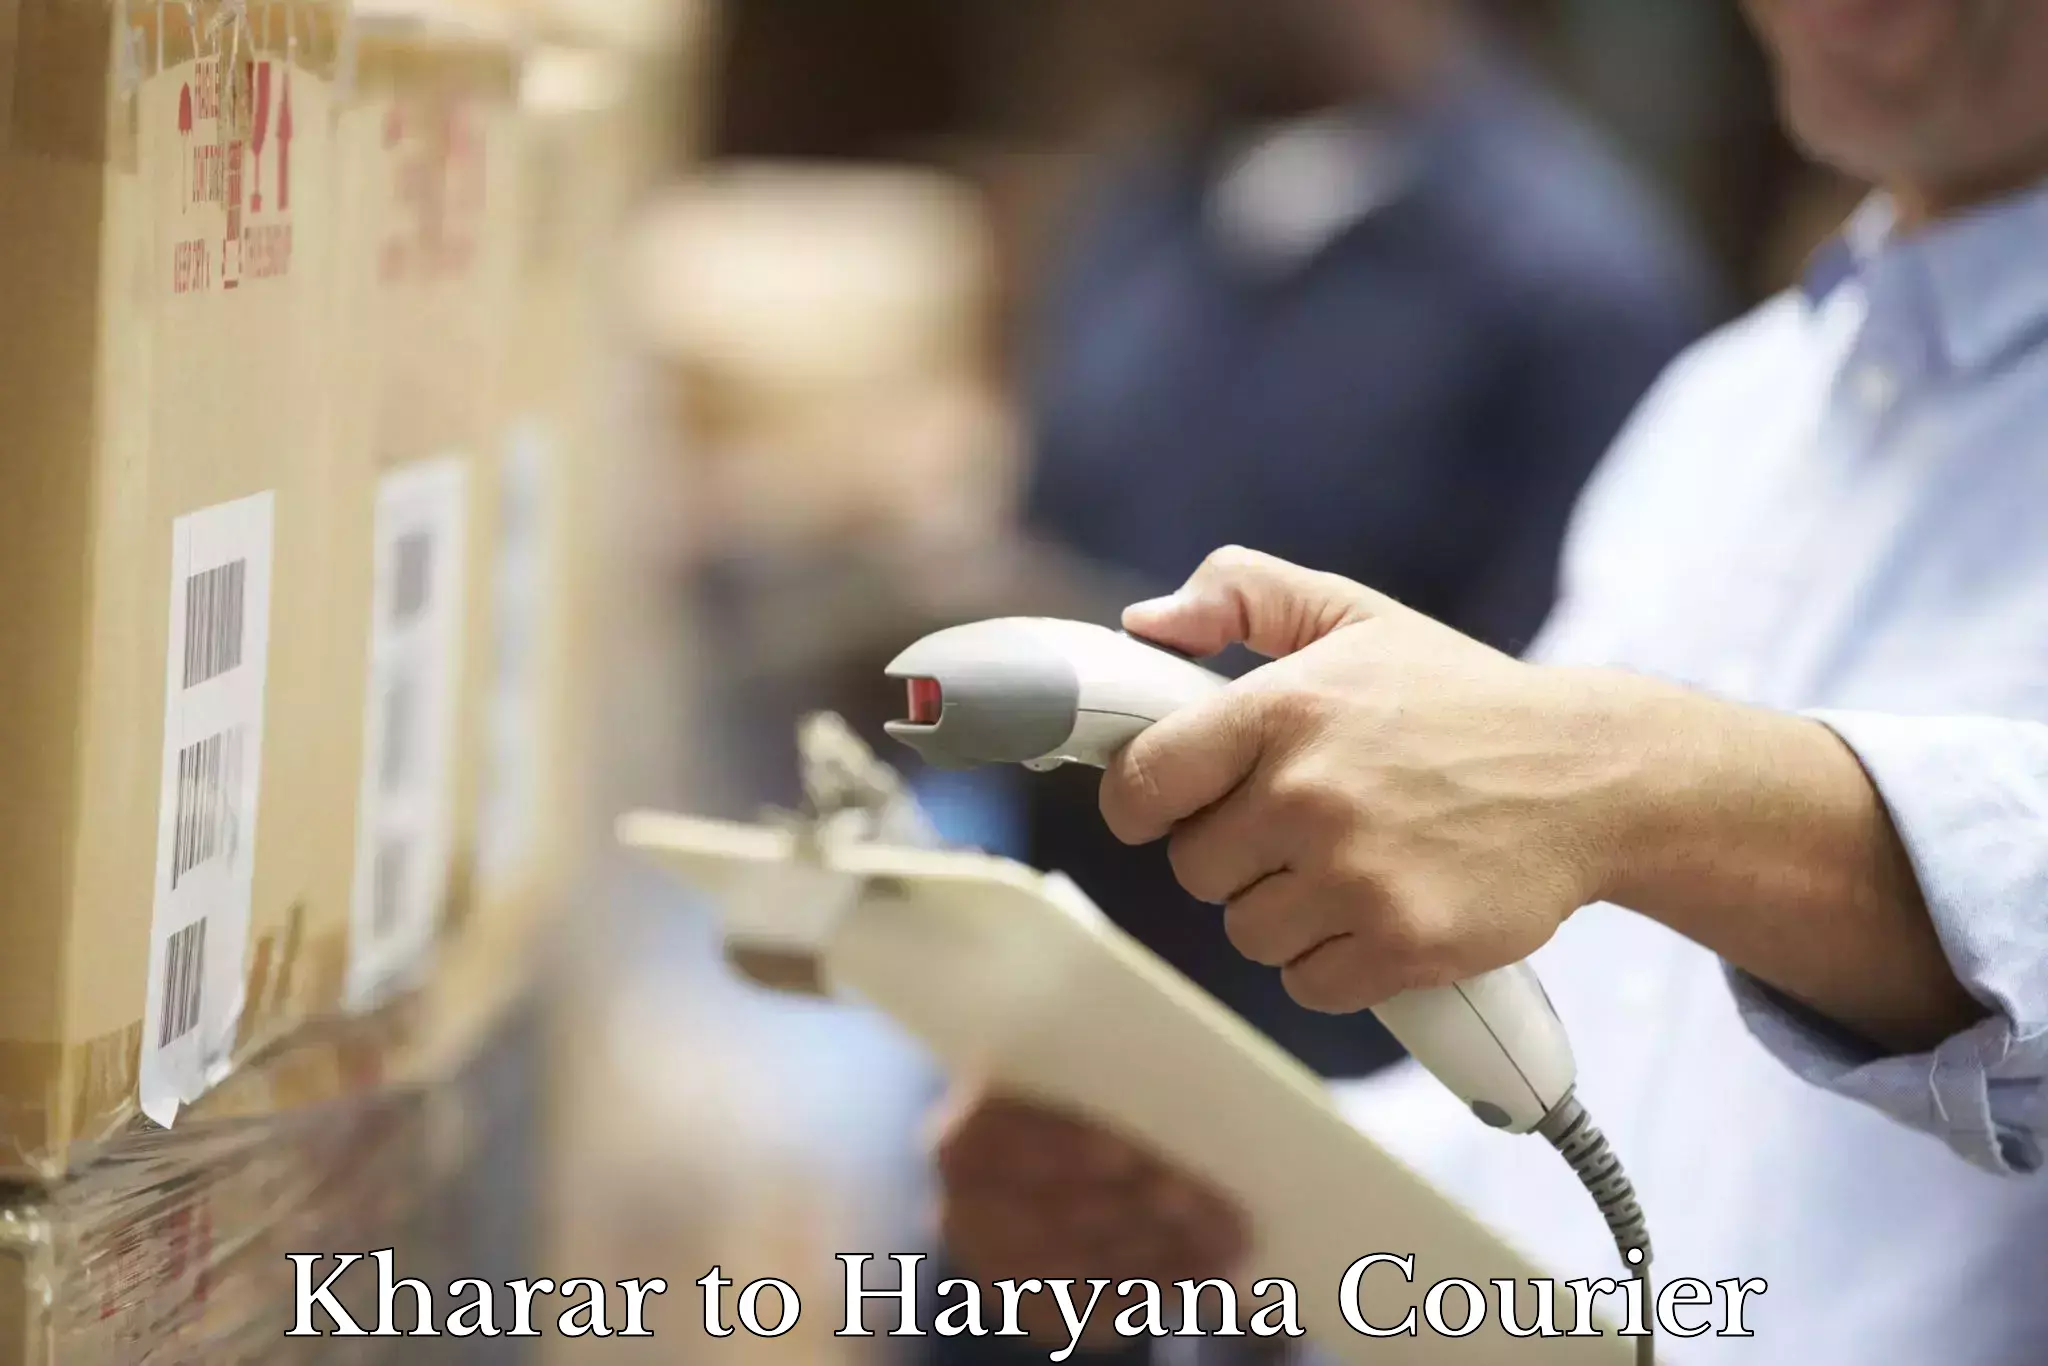 Package forwarding in Kharar to Gurugram